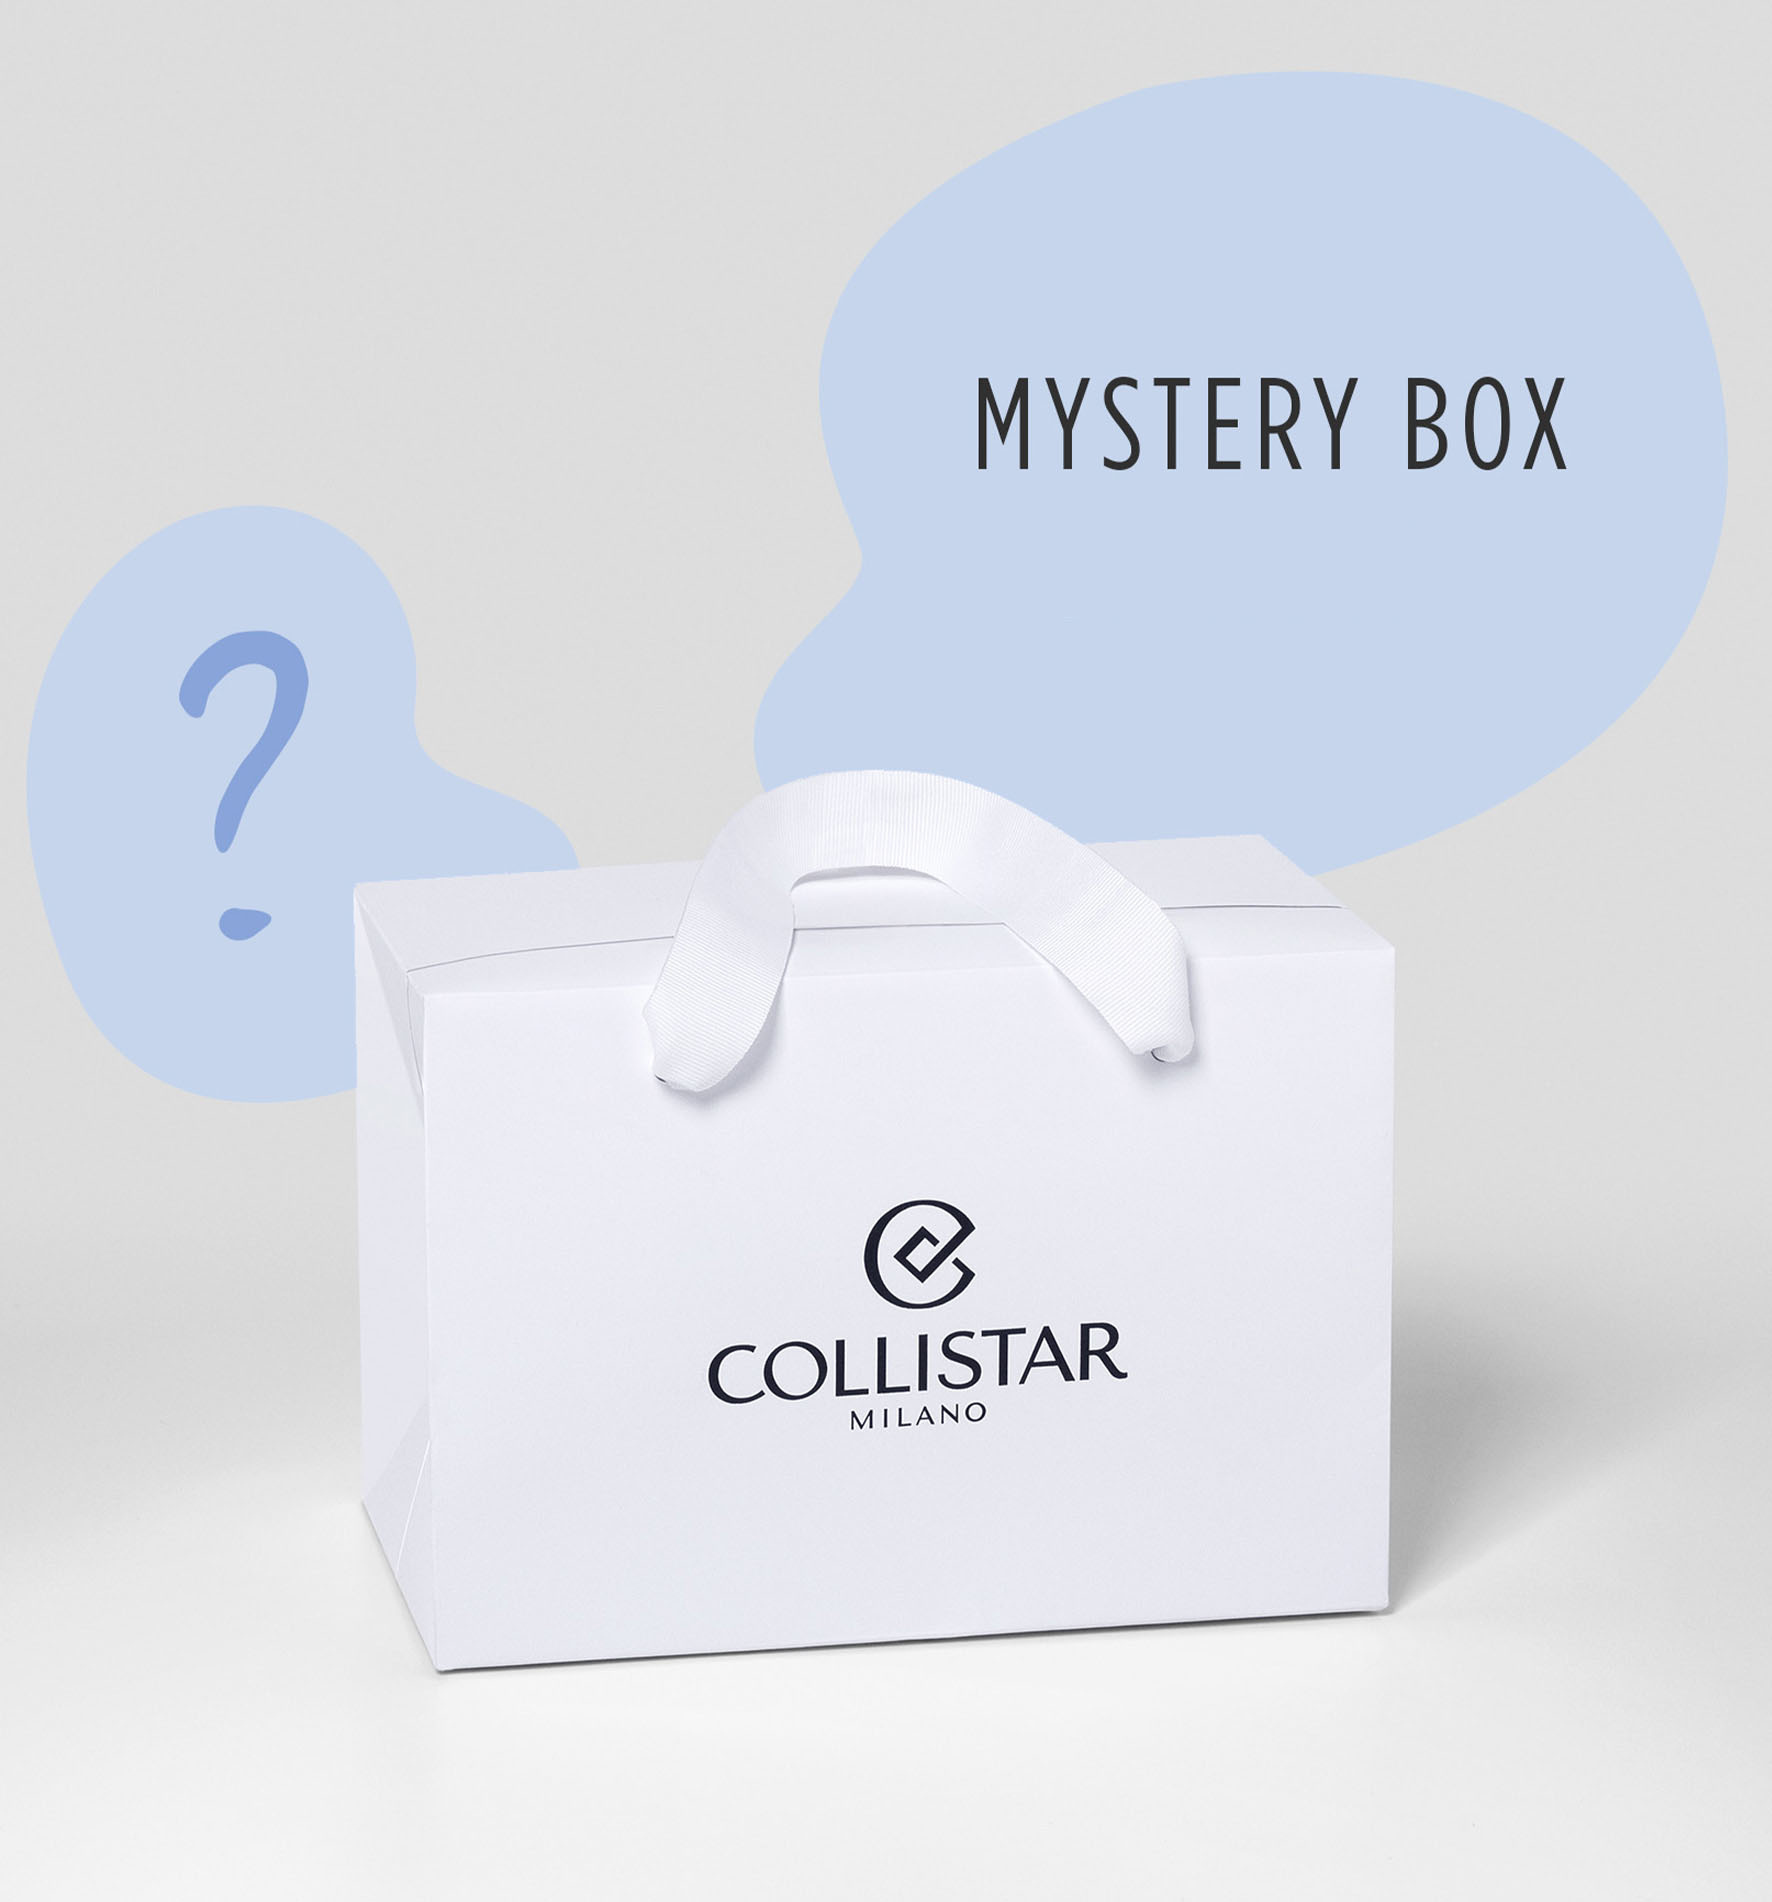 FACIAL MYSTERY BOX - Offerte Esclusive | Collistar - Shop Online Ufficiale